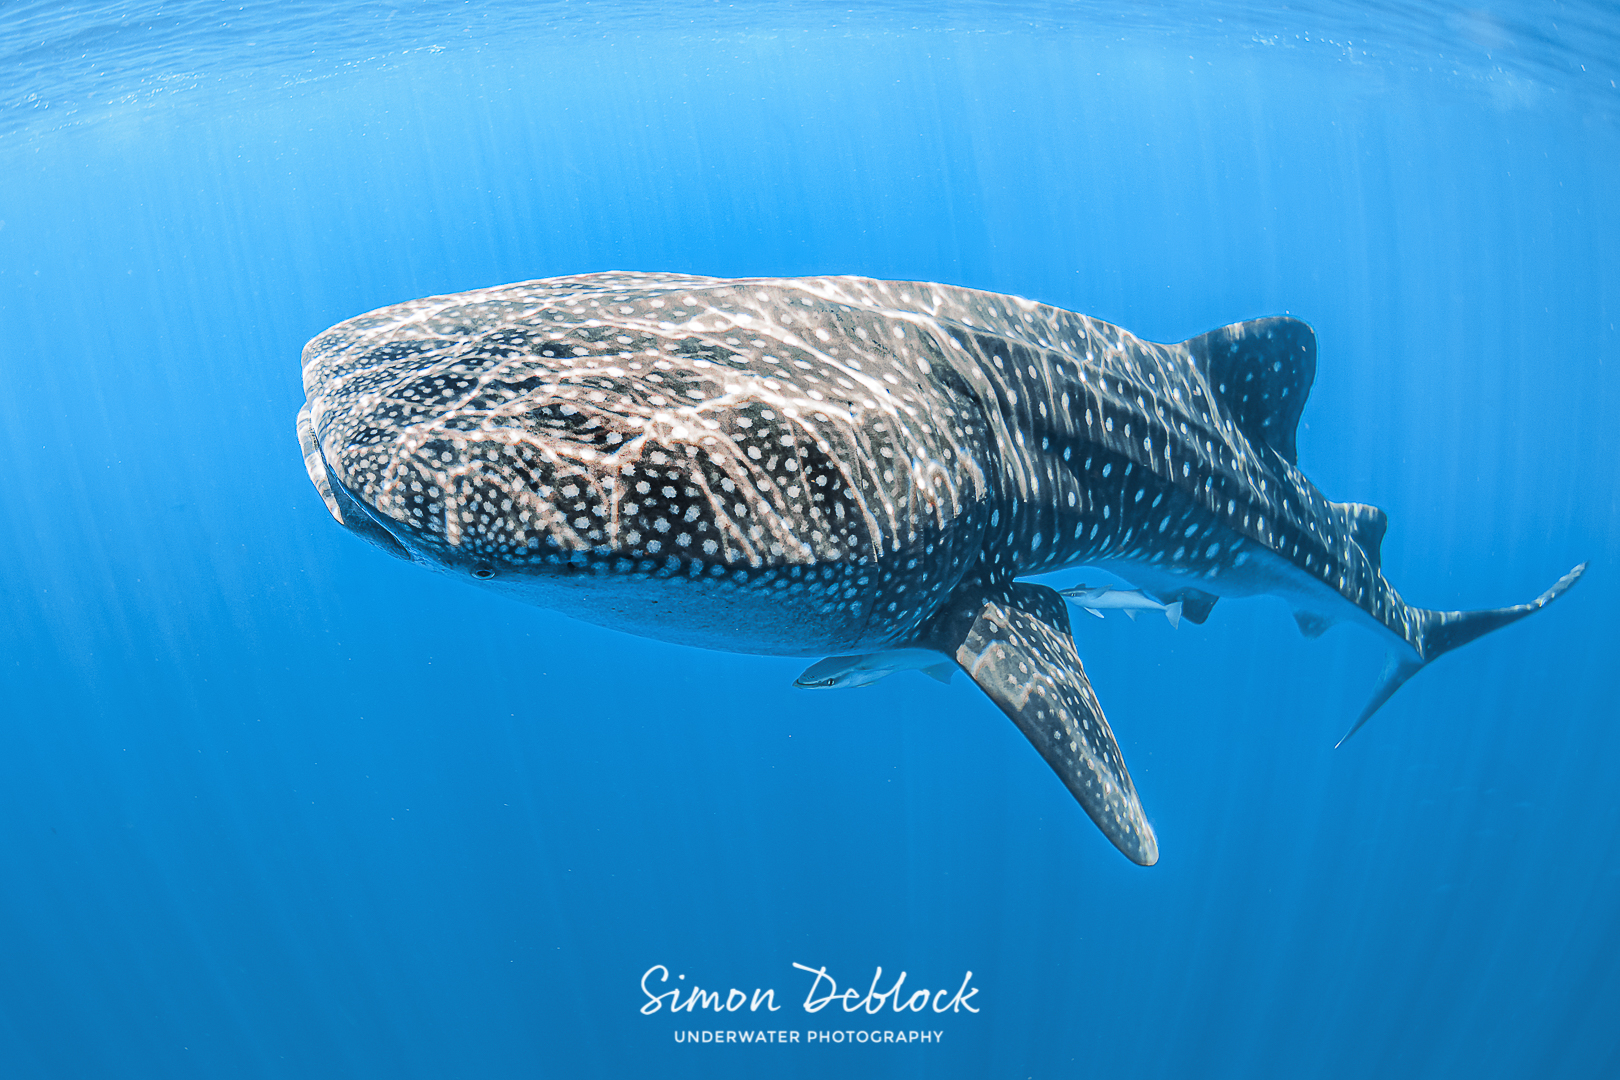 dimple dand share shark fucking a whale photos